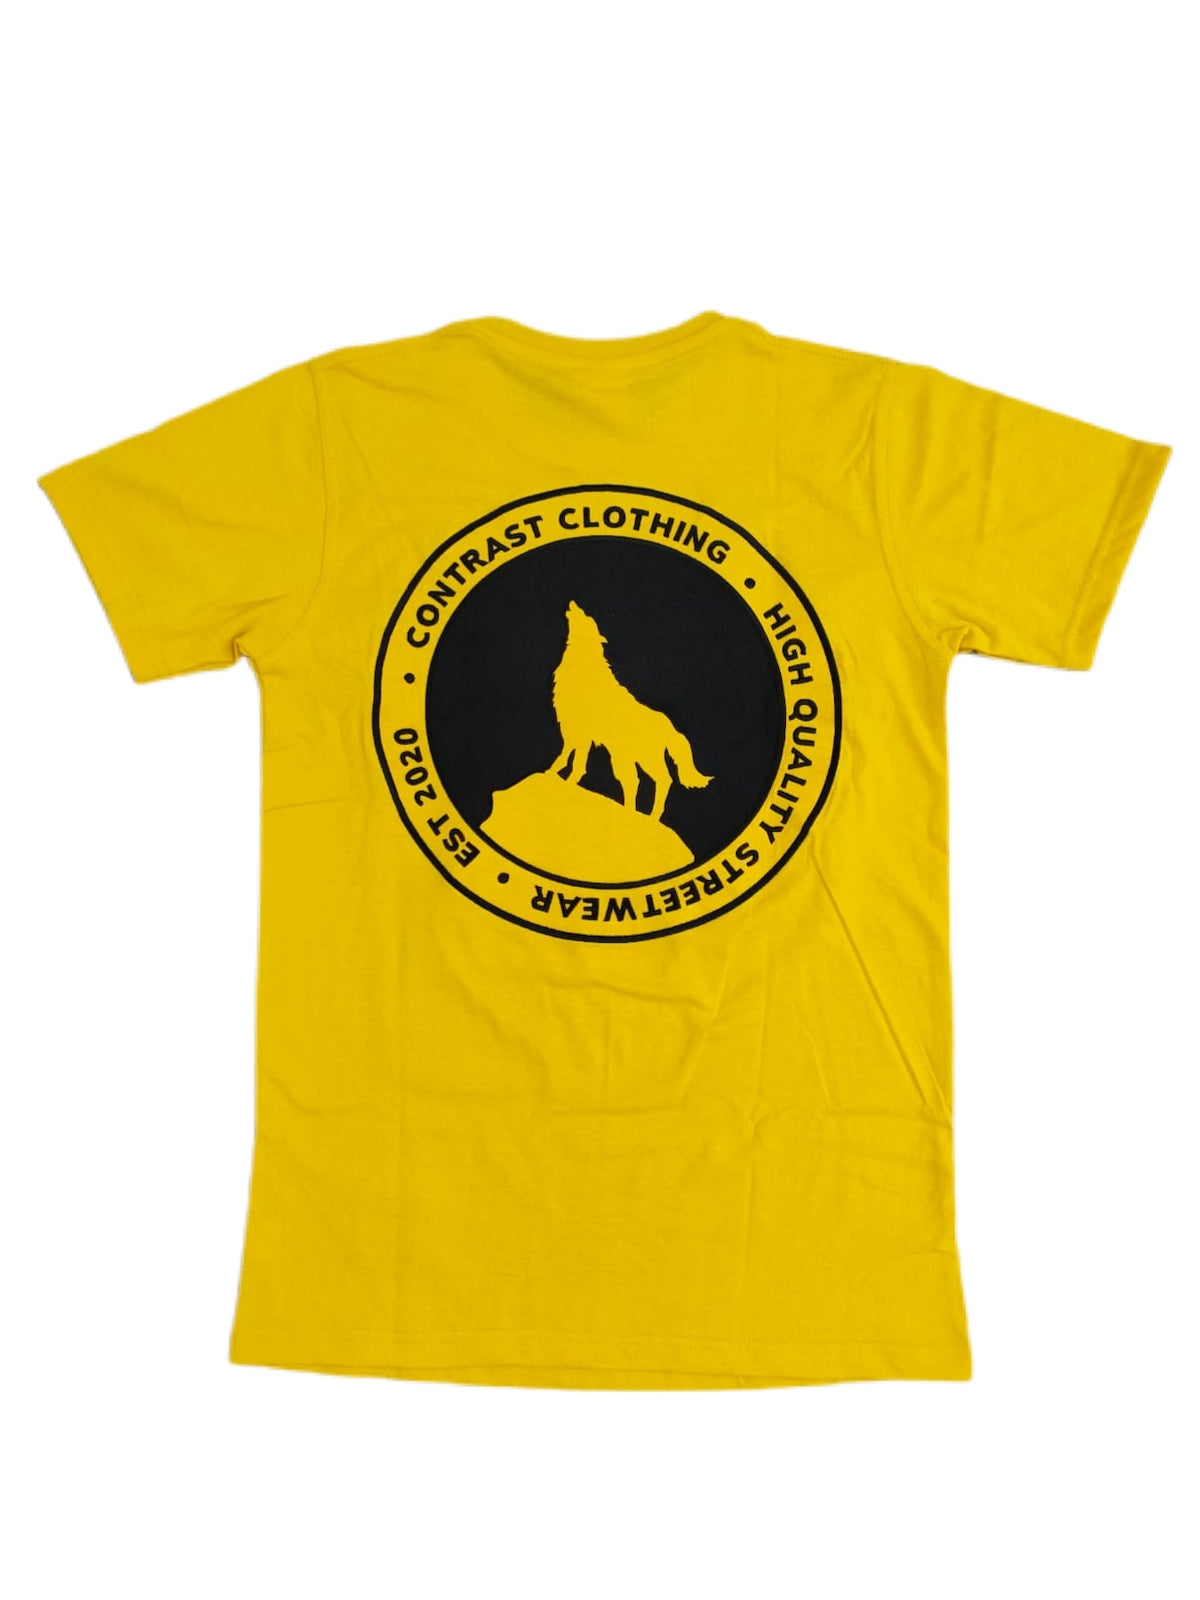 Contrast Clothing Worthing half moon wolf back print logo tee yellow men's streetwear